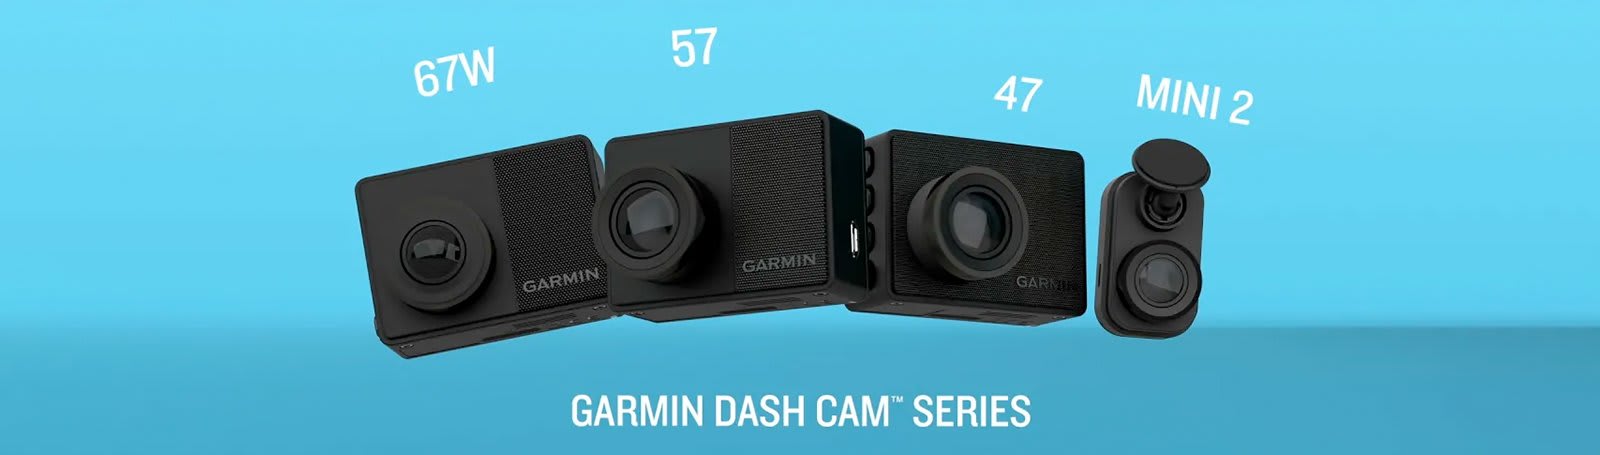 Incident Detection Recording and Signature Series Cloth 1080p 140-degree FOV Garmin Dash Cam Mini 2 